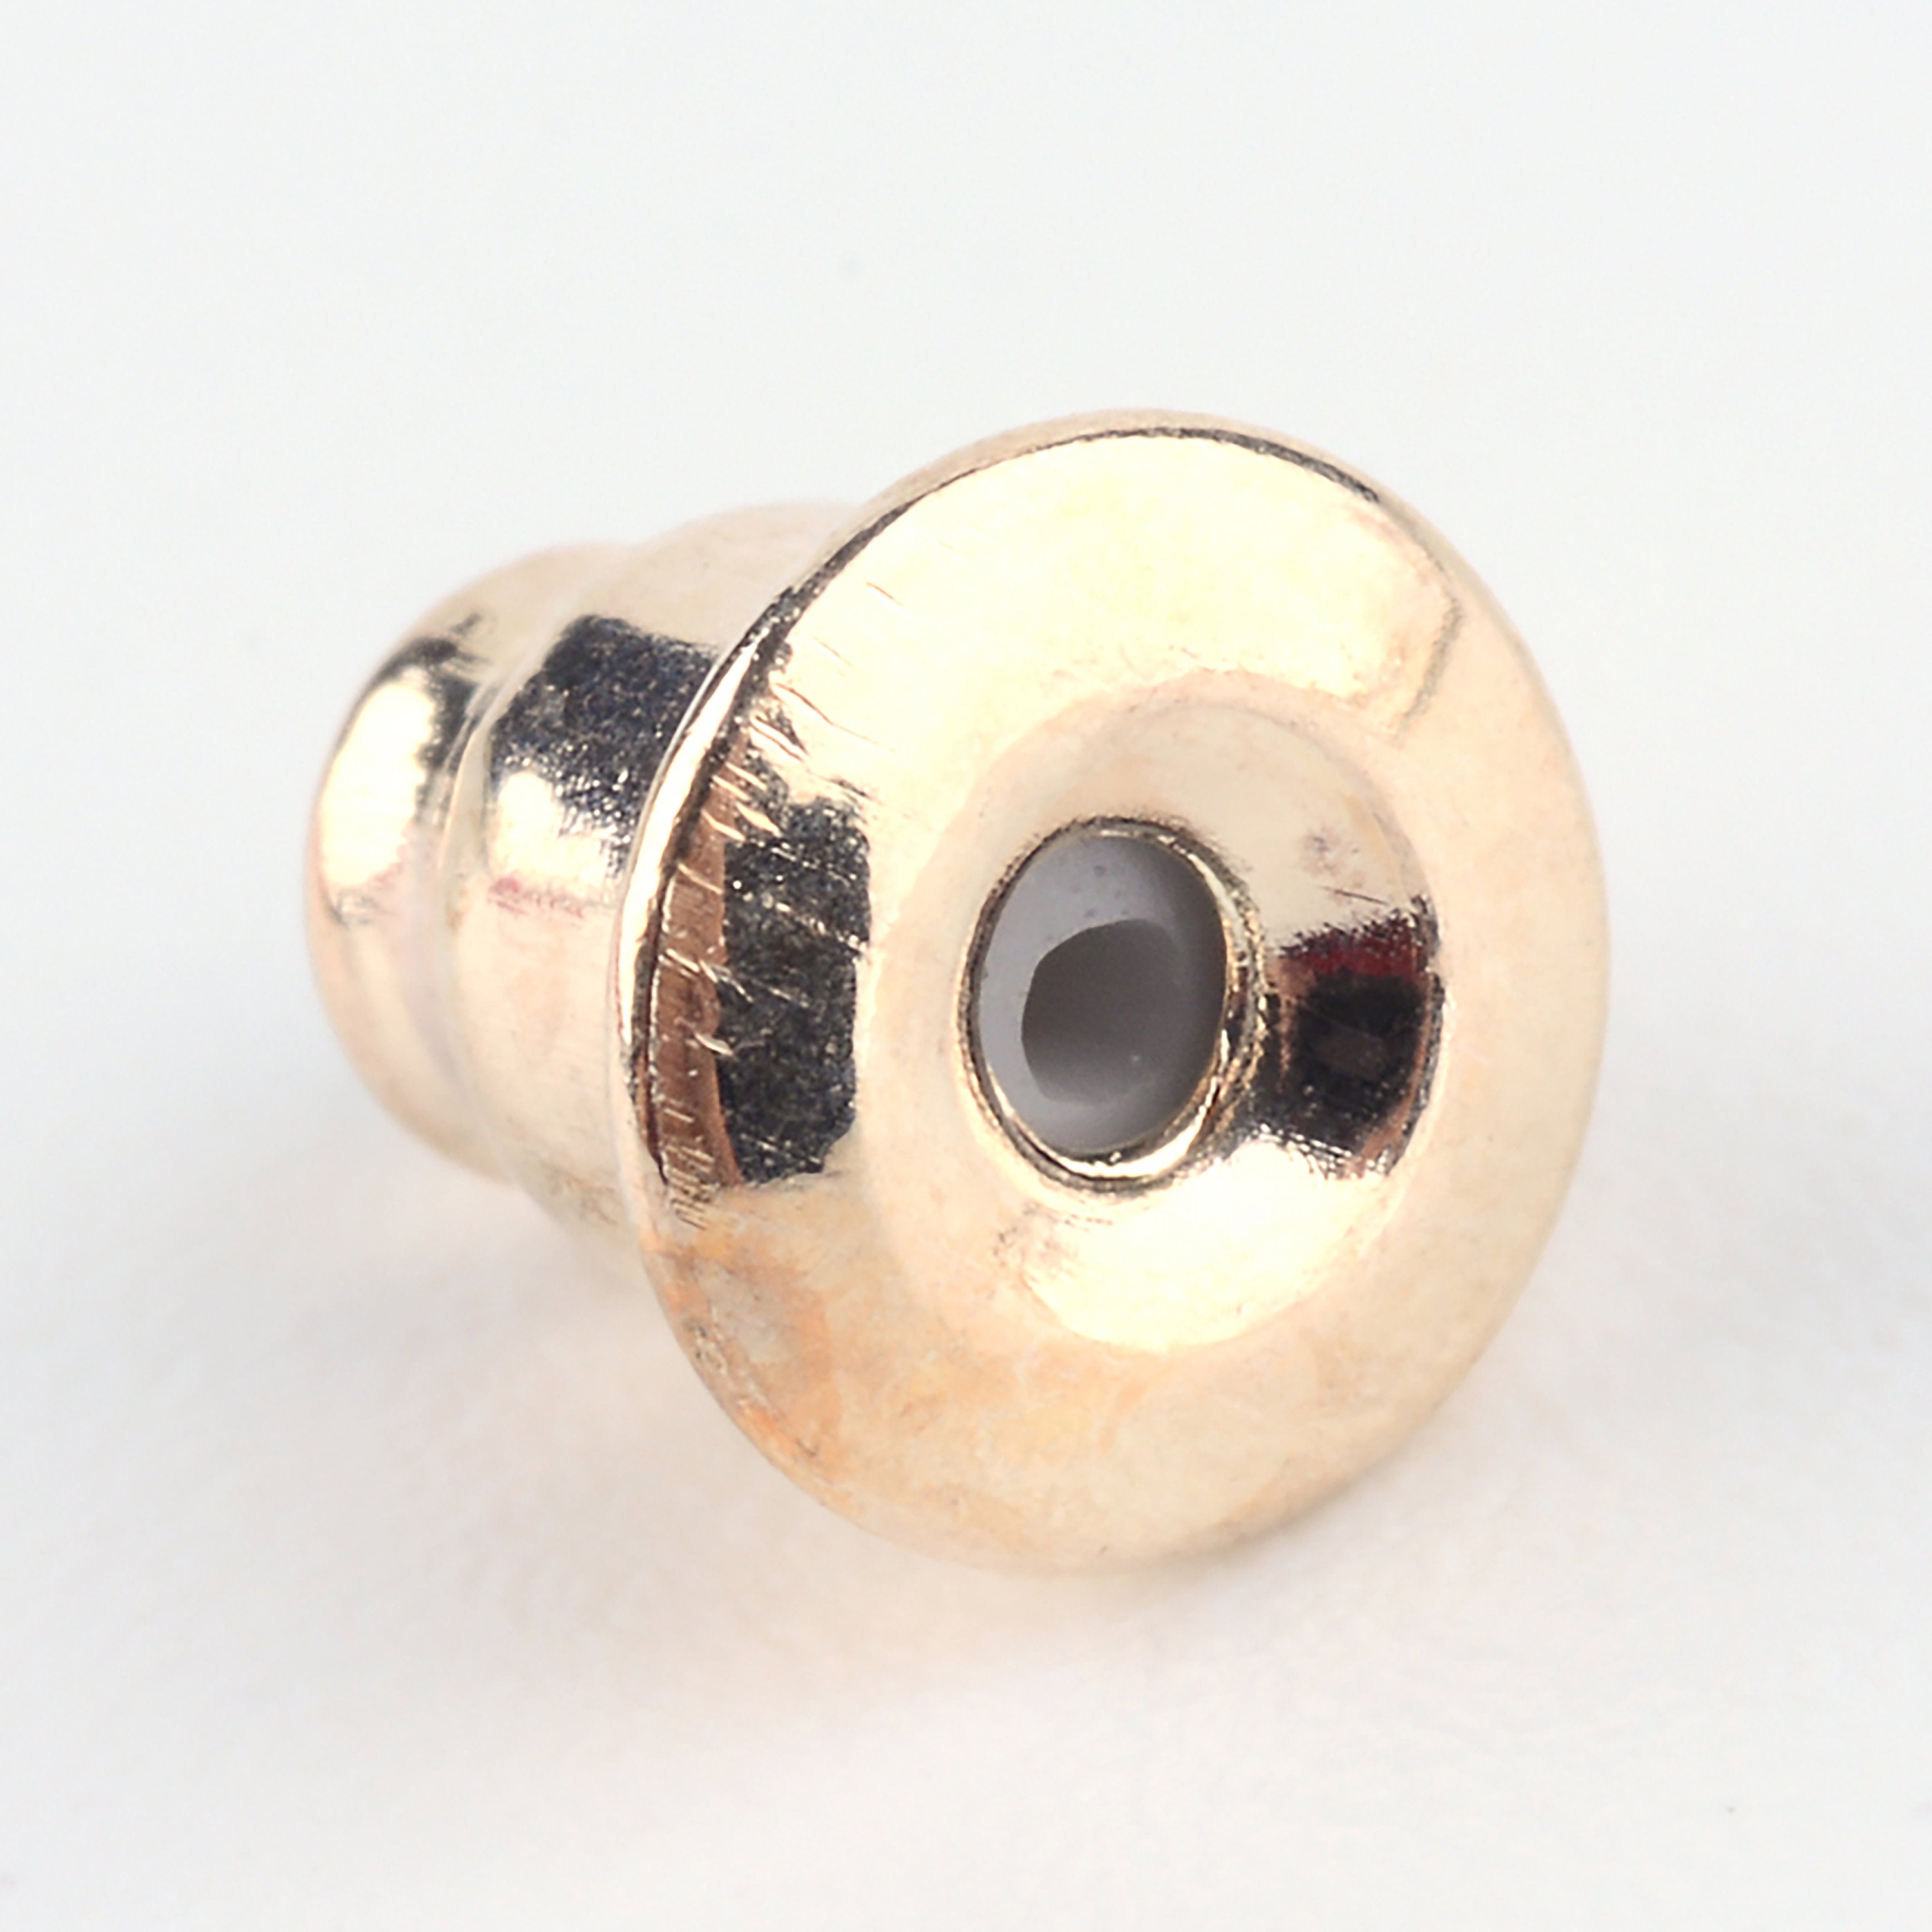 100pcs, 6x5mm, Iron Bullet Earring Backs // Stoppers // Ear Post Nut in Rose Gold